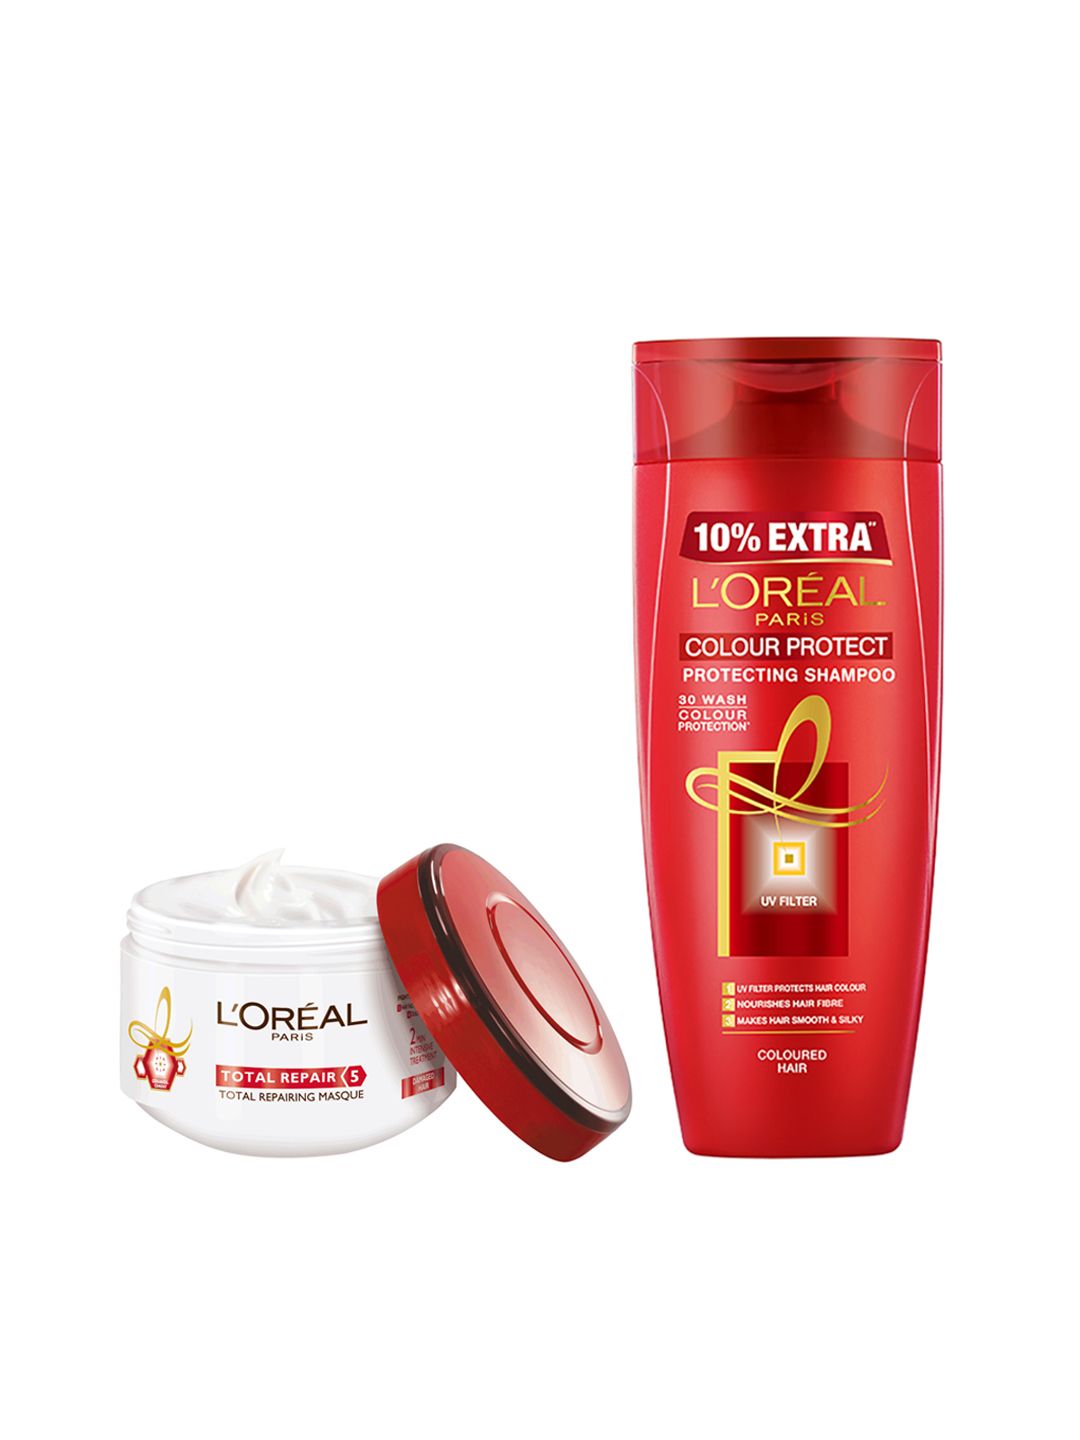 L'Oreal Paris Pack of 2 Total Repair 5 Hair Masque & Colour Protect Shampoo Price in India